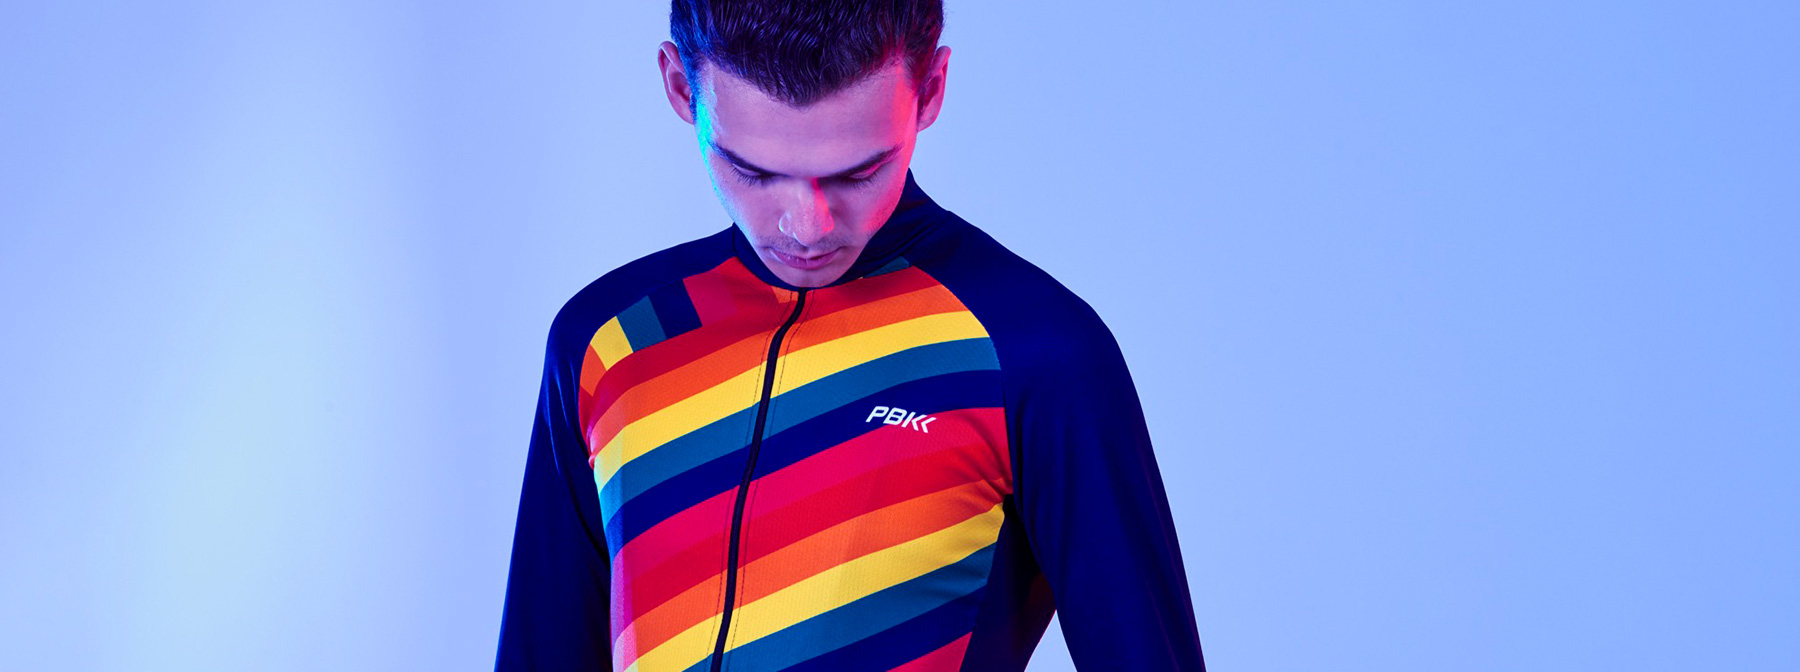 PBK clothing Capra Winter Roubaix Jersey in Rainbow design.